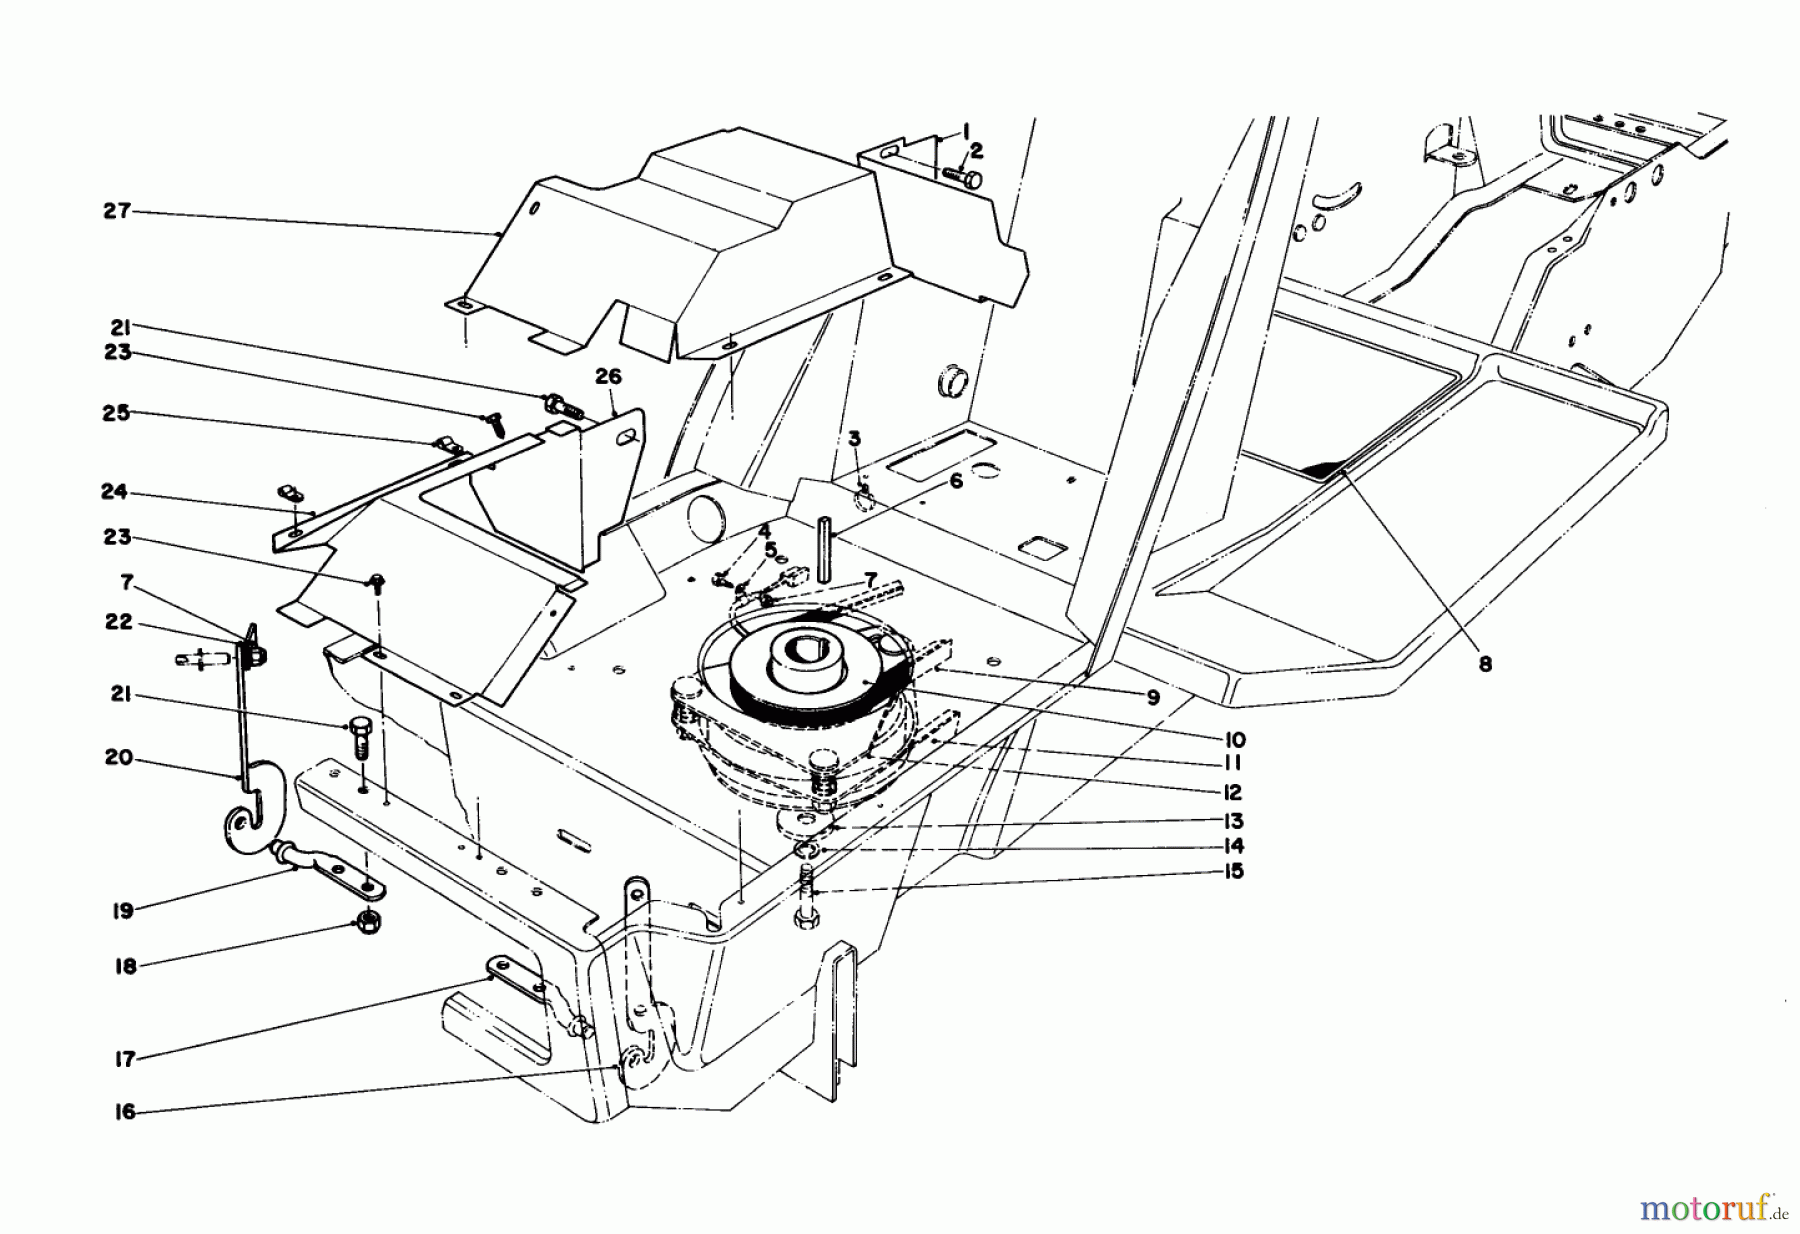  Toro Neu Mowers, Lawn & Garden Tractor Seite 1 57300 (8-32) - Toro 8-32 Front Engine Rider, 1982 (2000001-2999999) CLUTCH & PULLEY ASSEMBLY